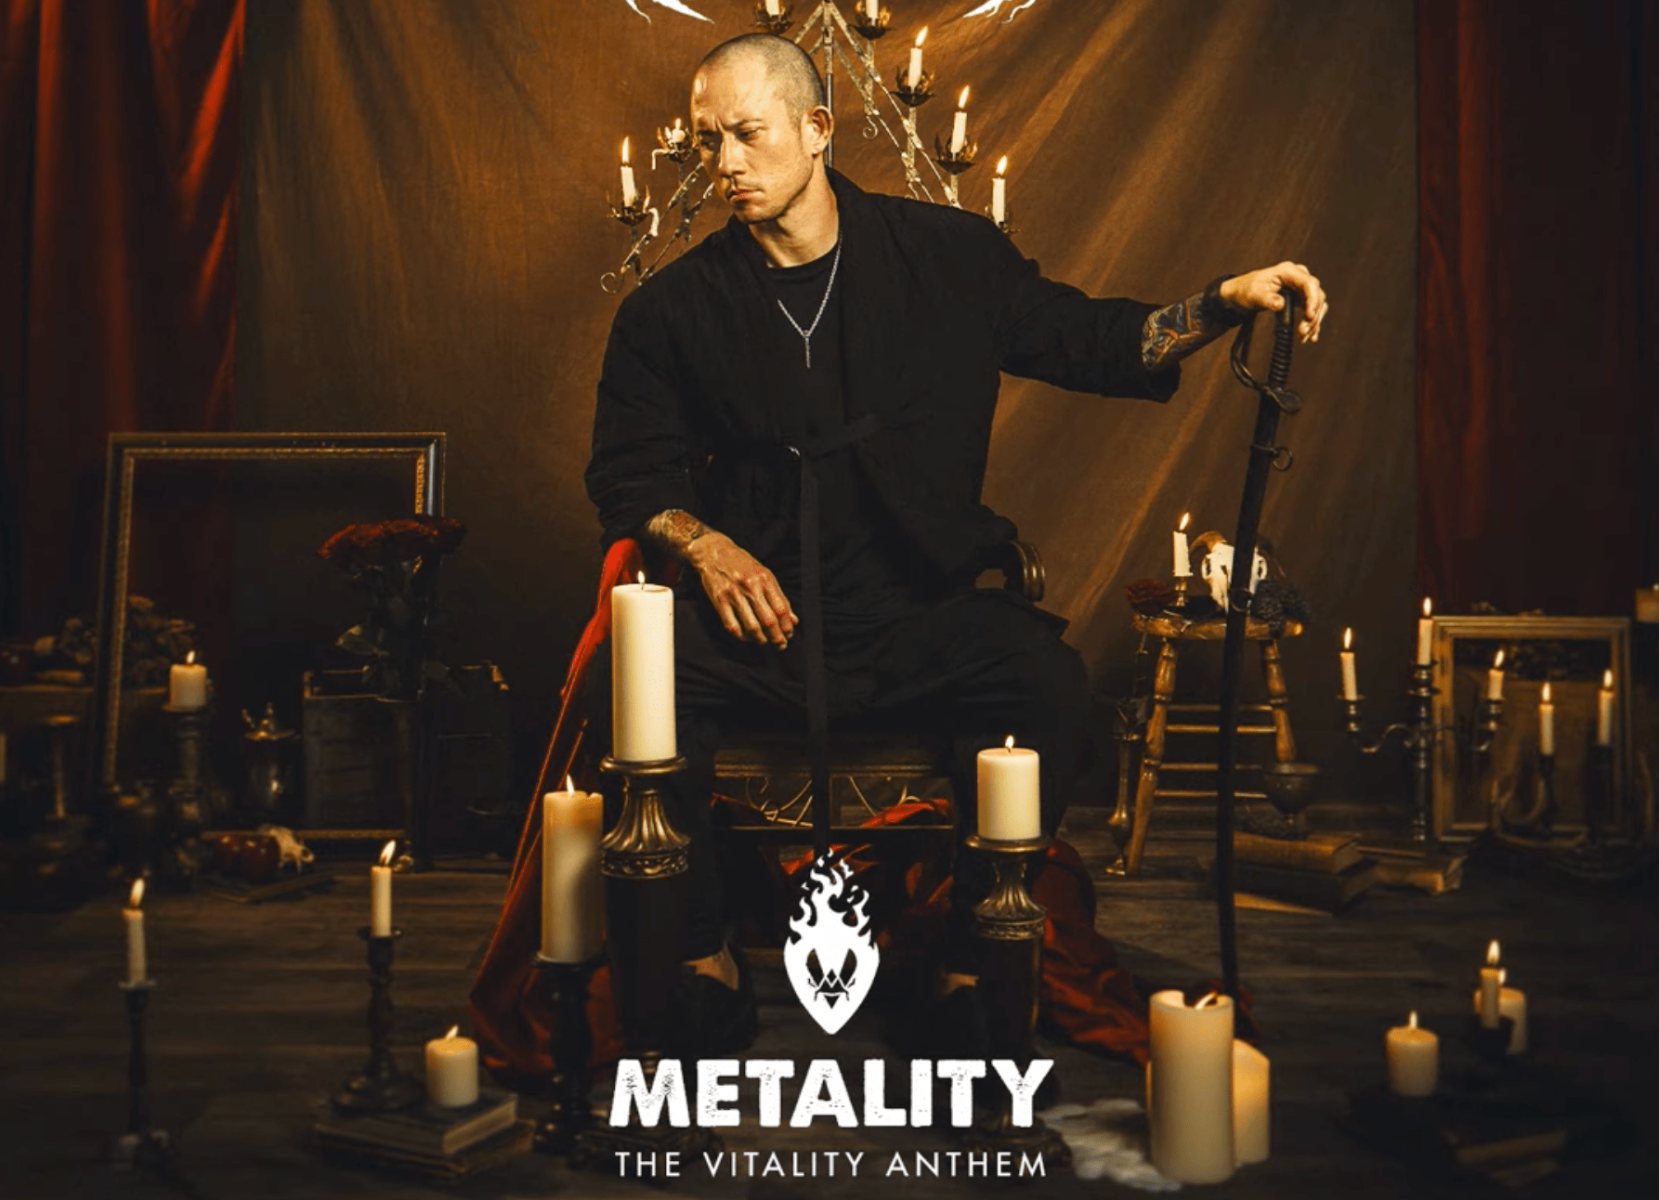 Team Vitality launches heavy mental anthem with Trivium’s Matt Heafy